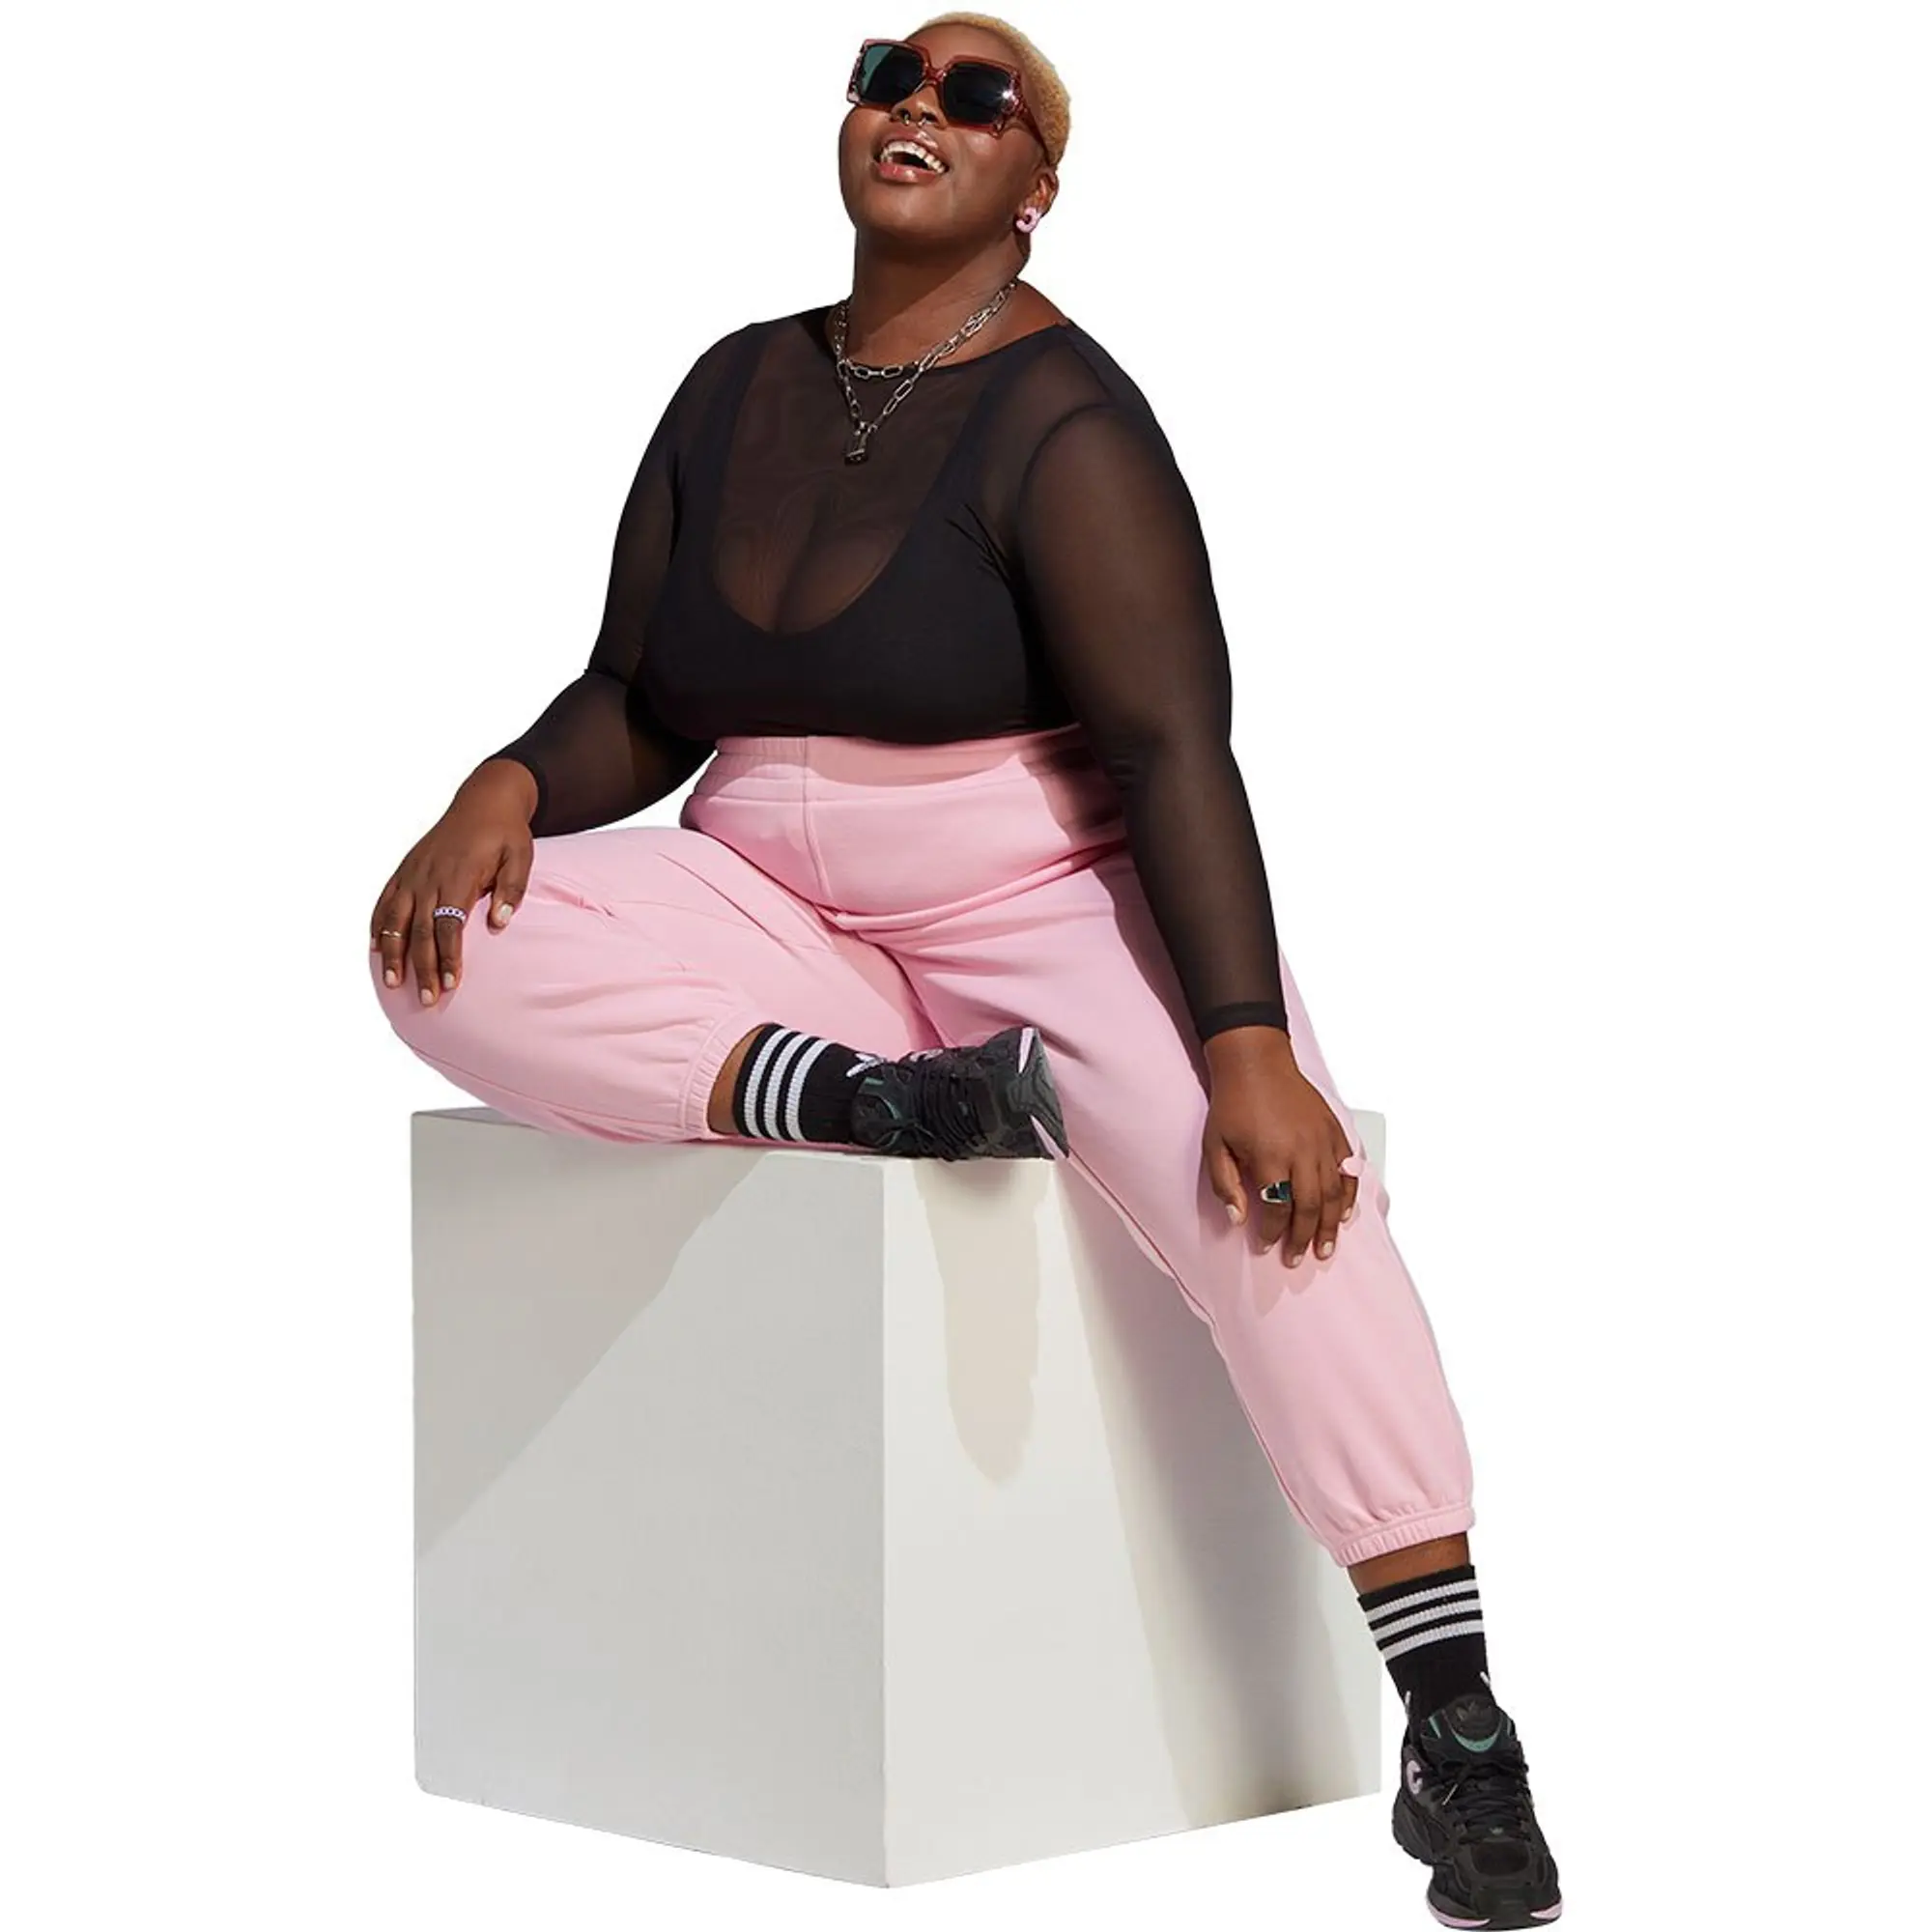 adidas Originals Adicolor Pants - Plus Size - Pink, Pink